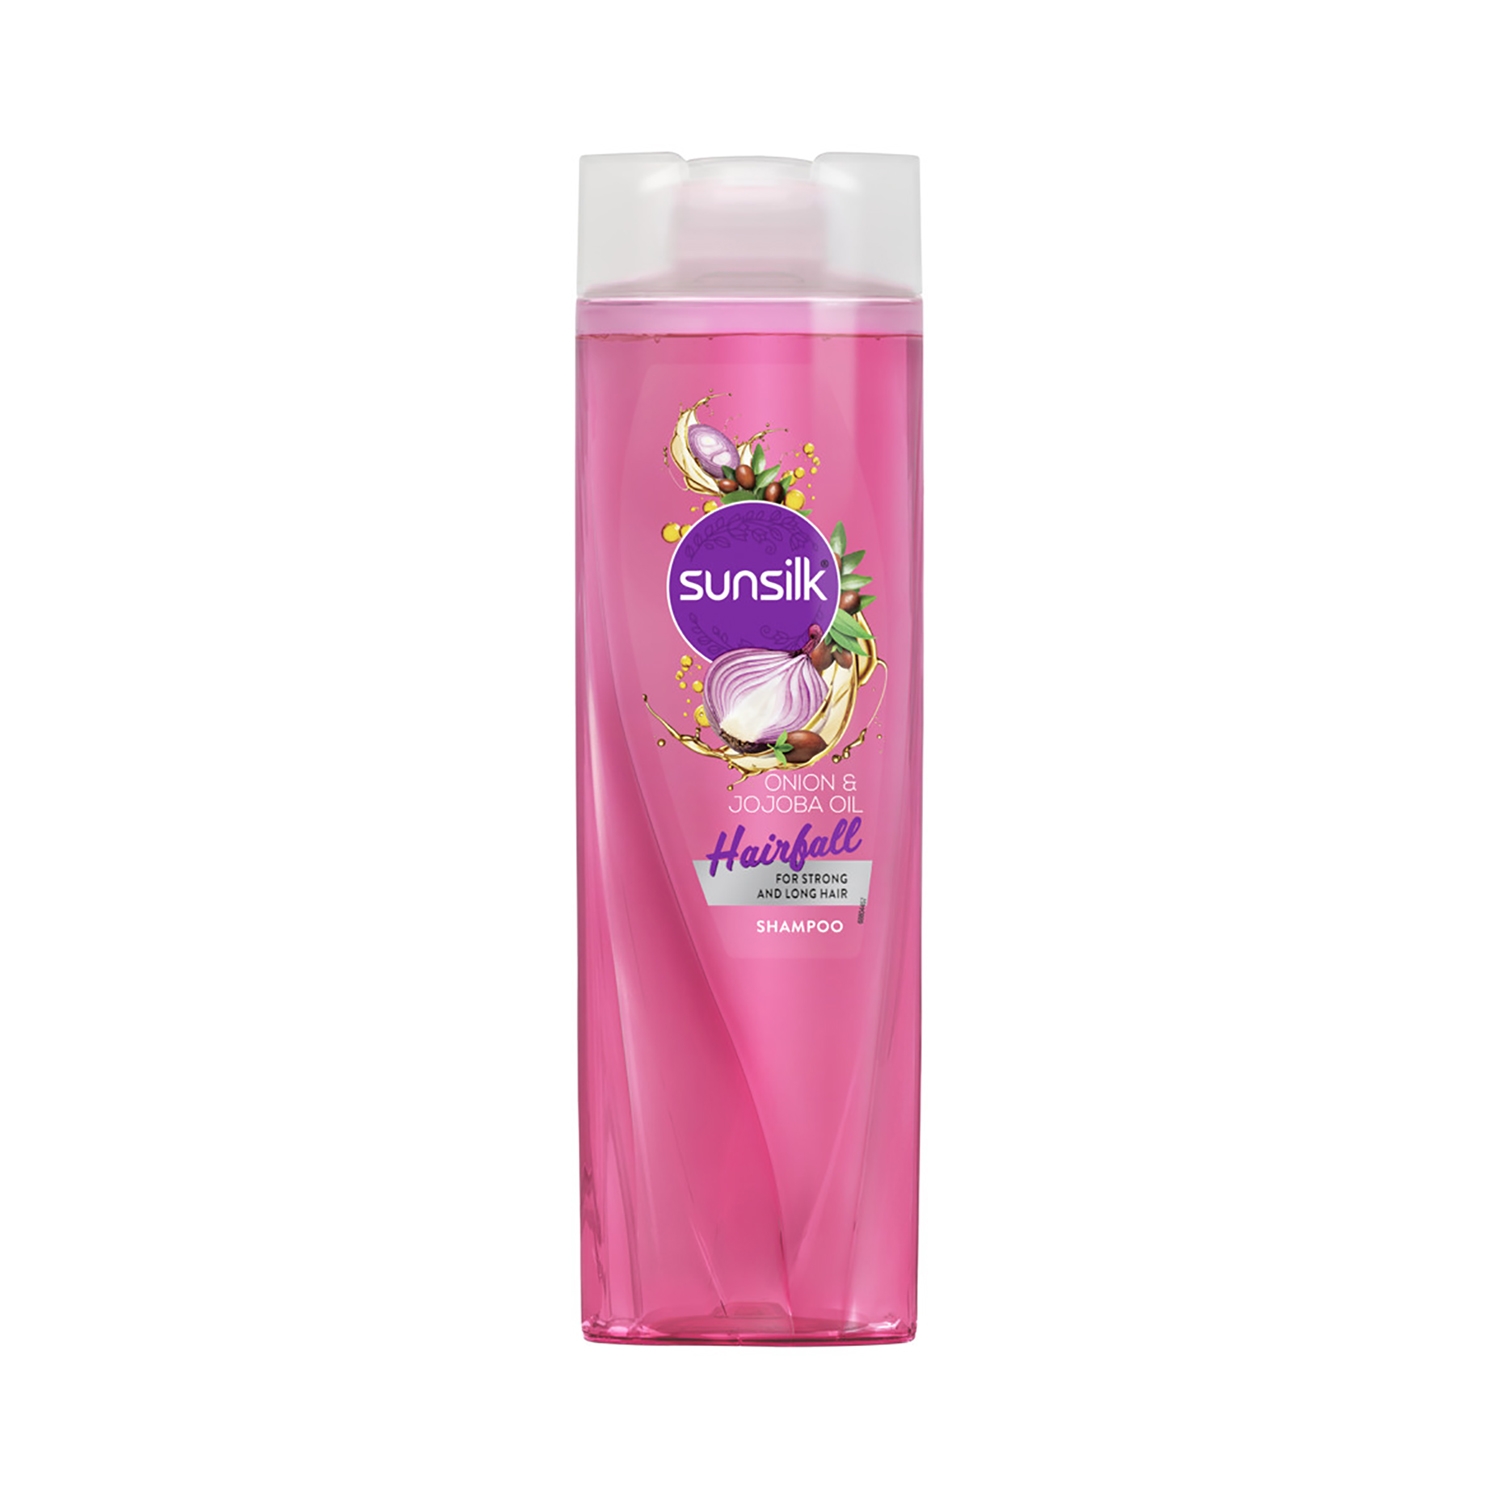 Sunsilk Hairfall Shampoo With Onion & Jojoba Oil (370ml)